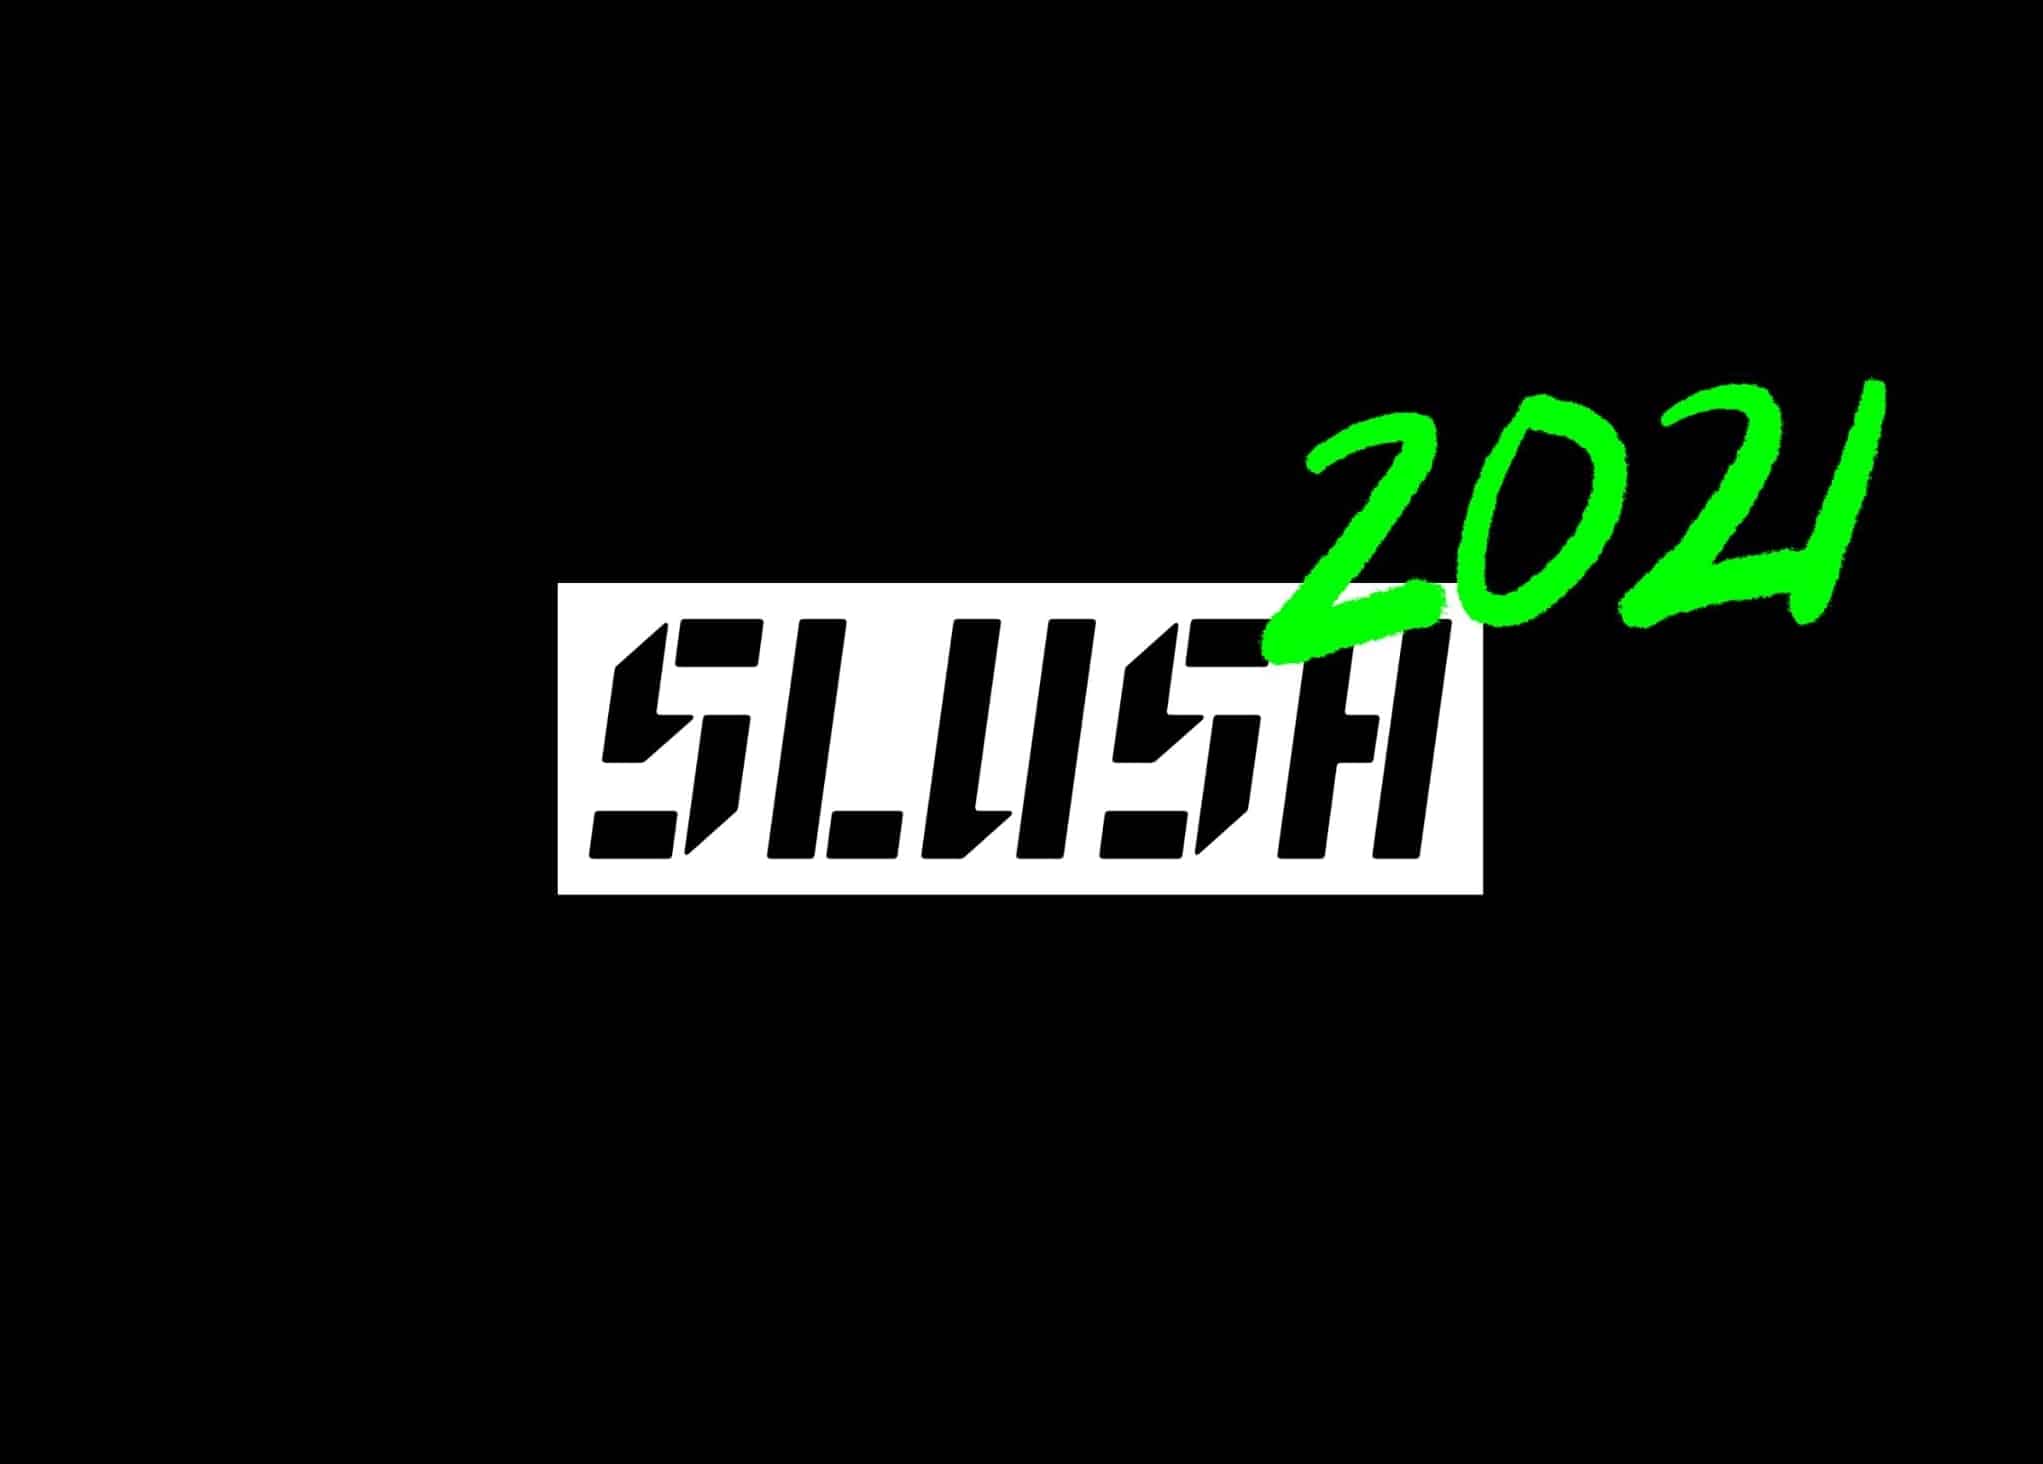 SLUSH startup impact event